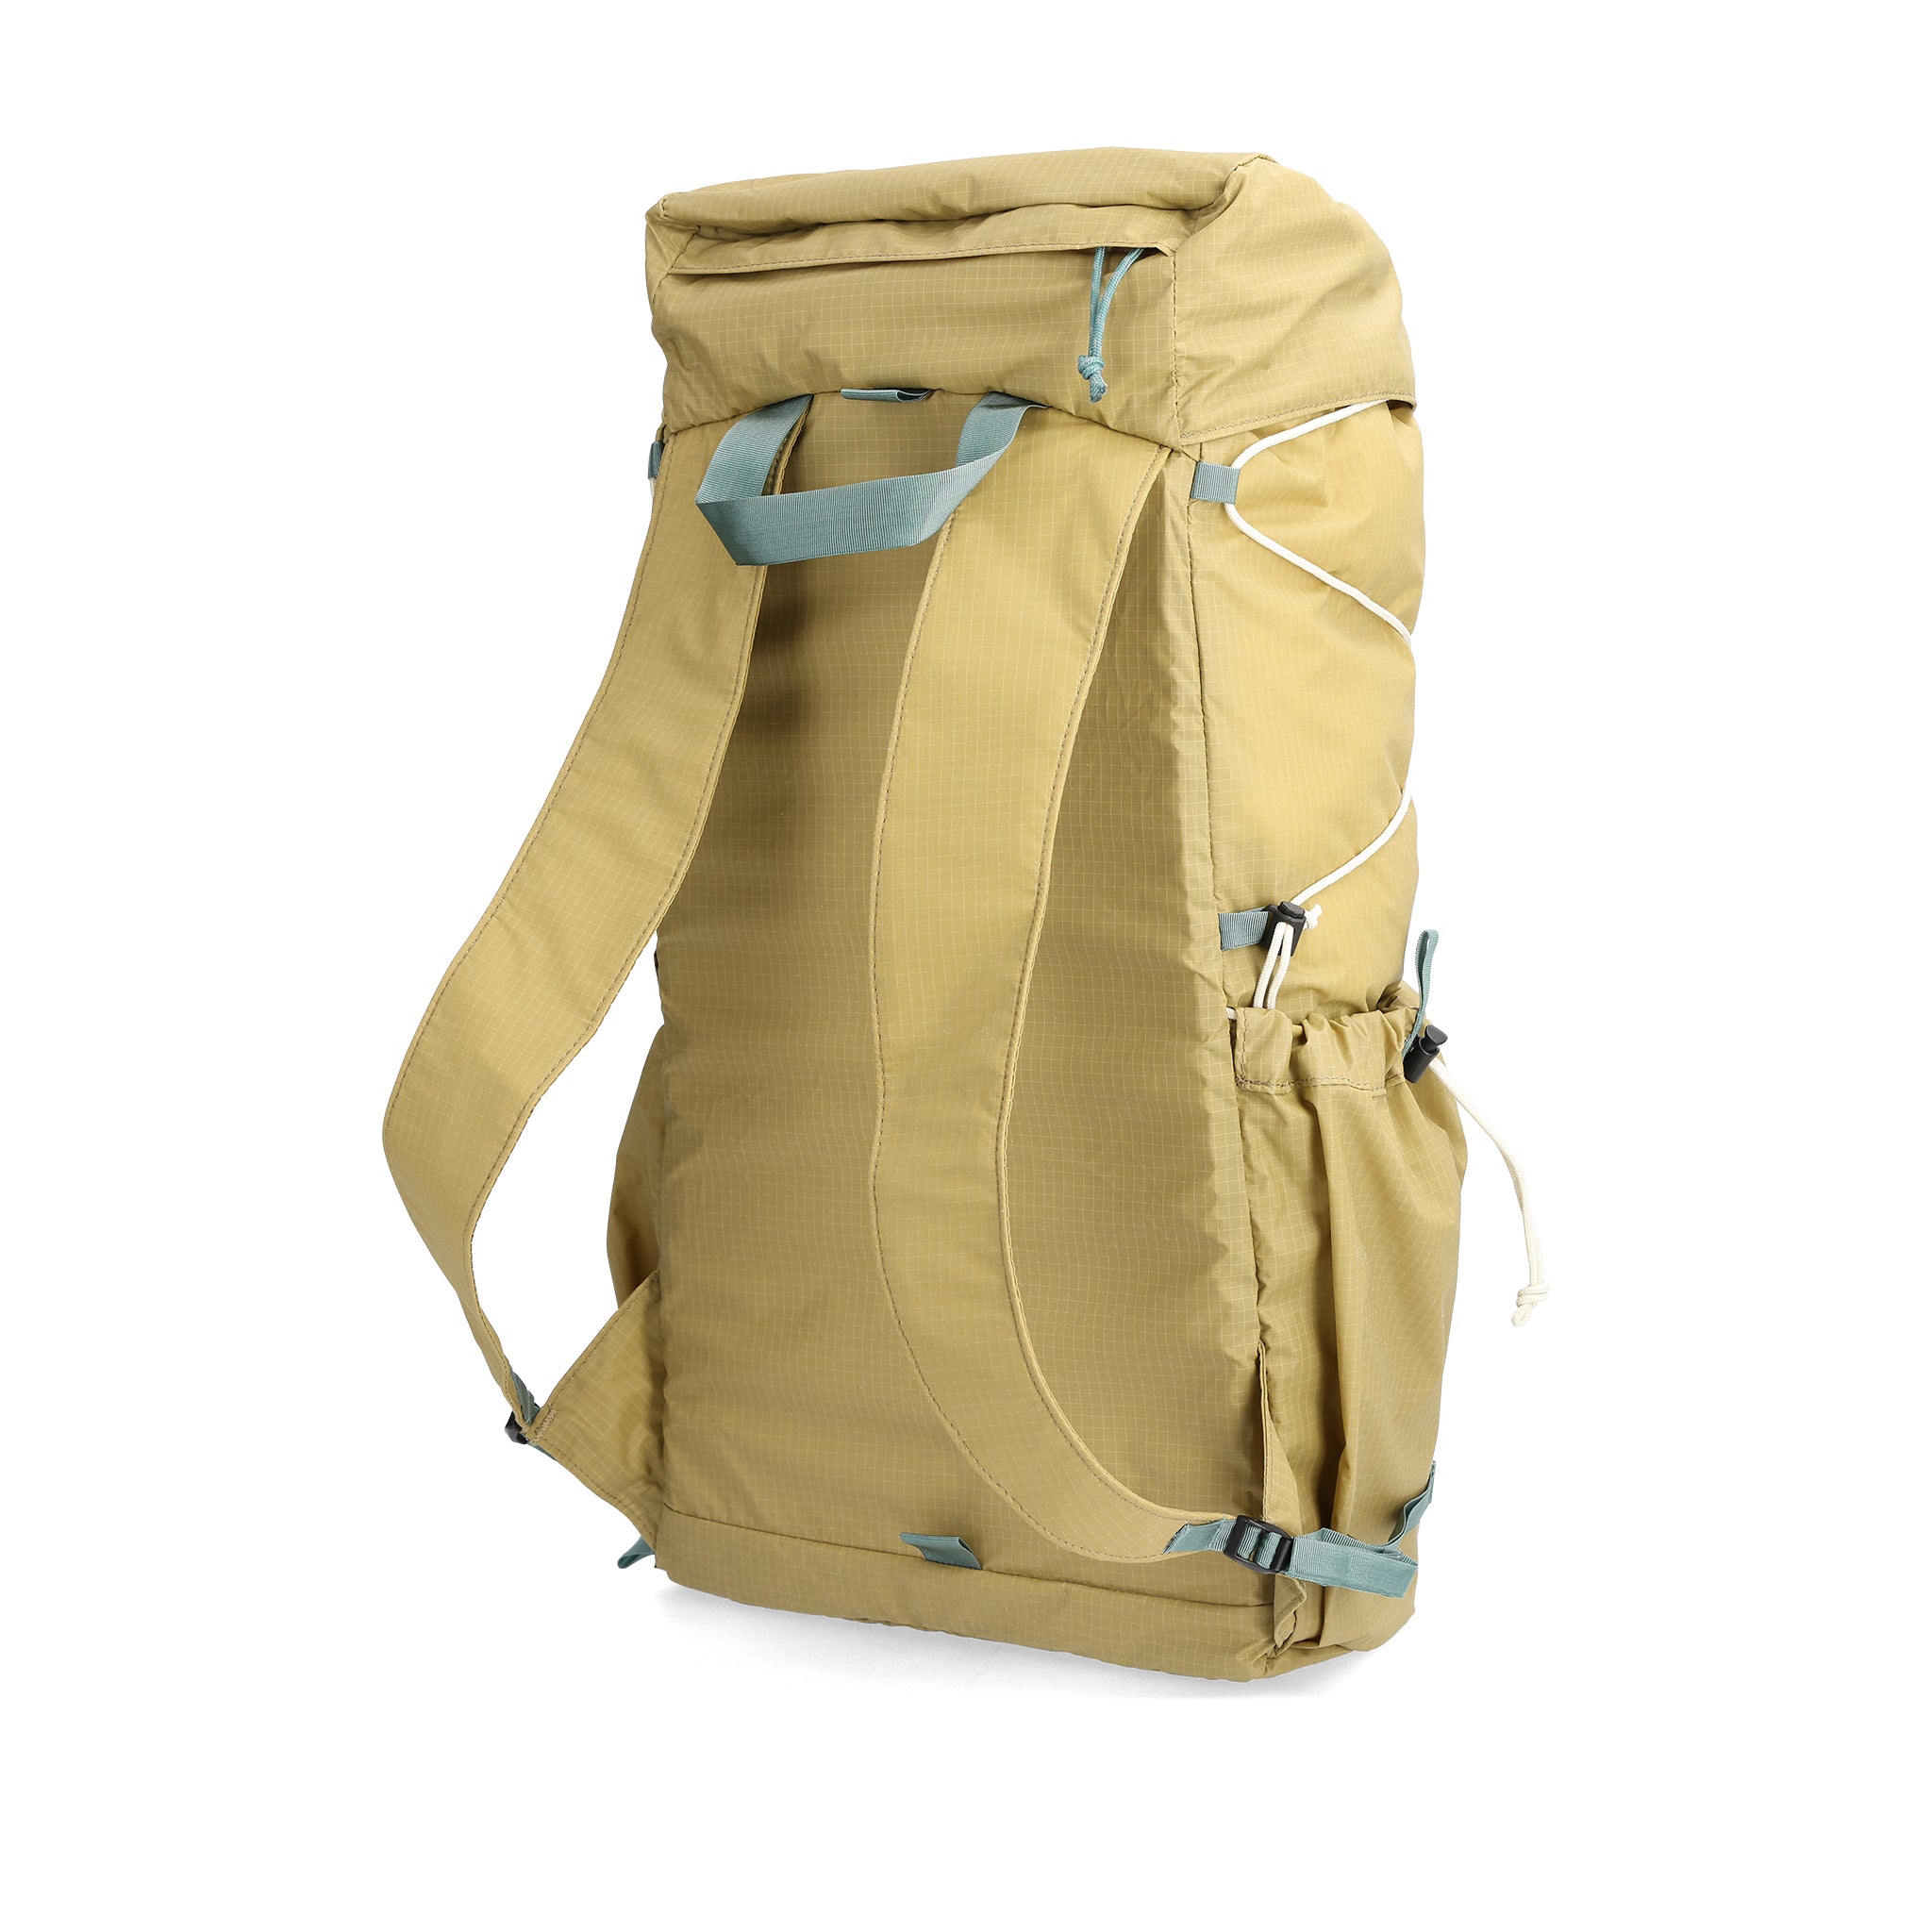 UIISSK Drawstring Backpack Sports Gym Bag Bulk Bags Cinch India | Ubuy